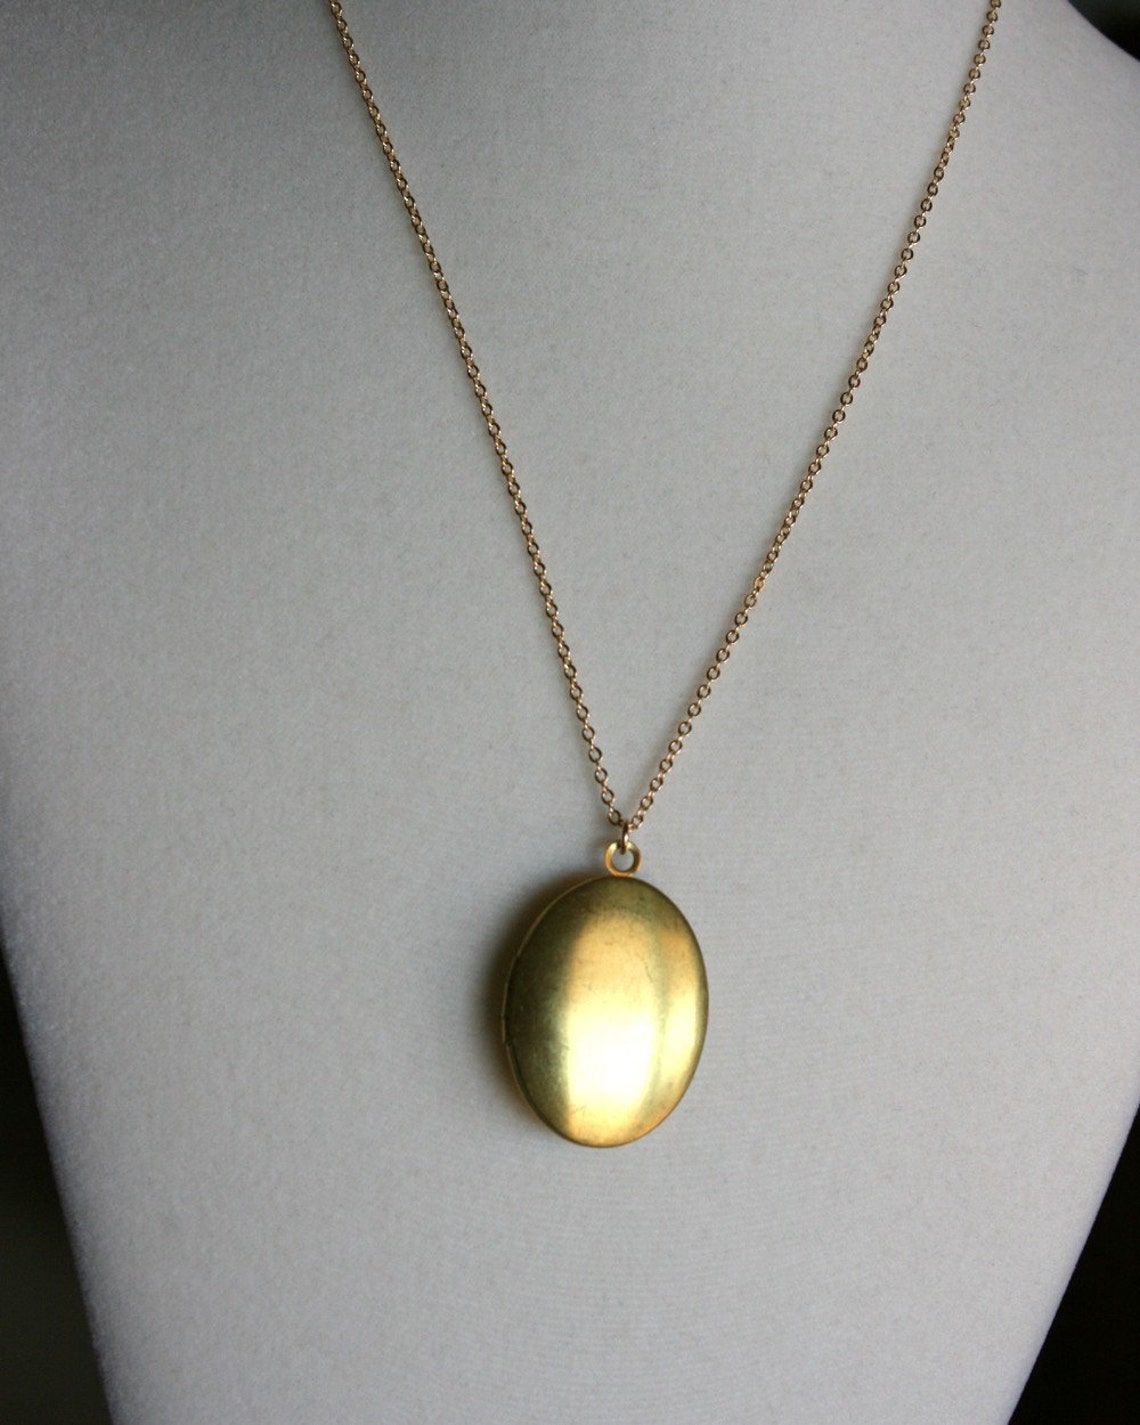 Locket necklace gold brass oval photo locket friendship | Etsy